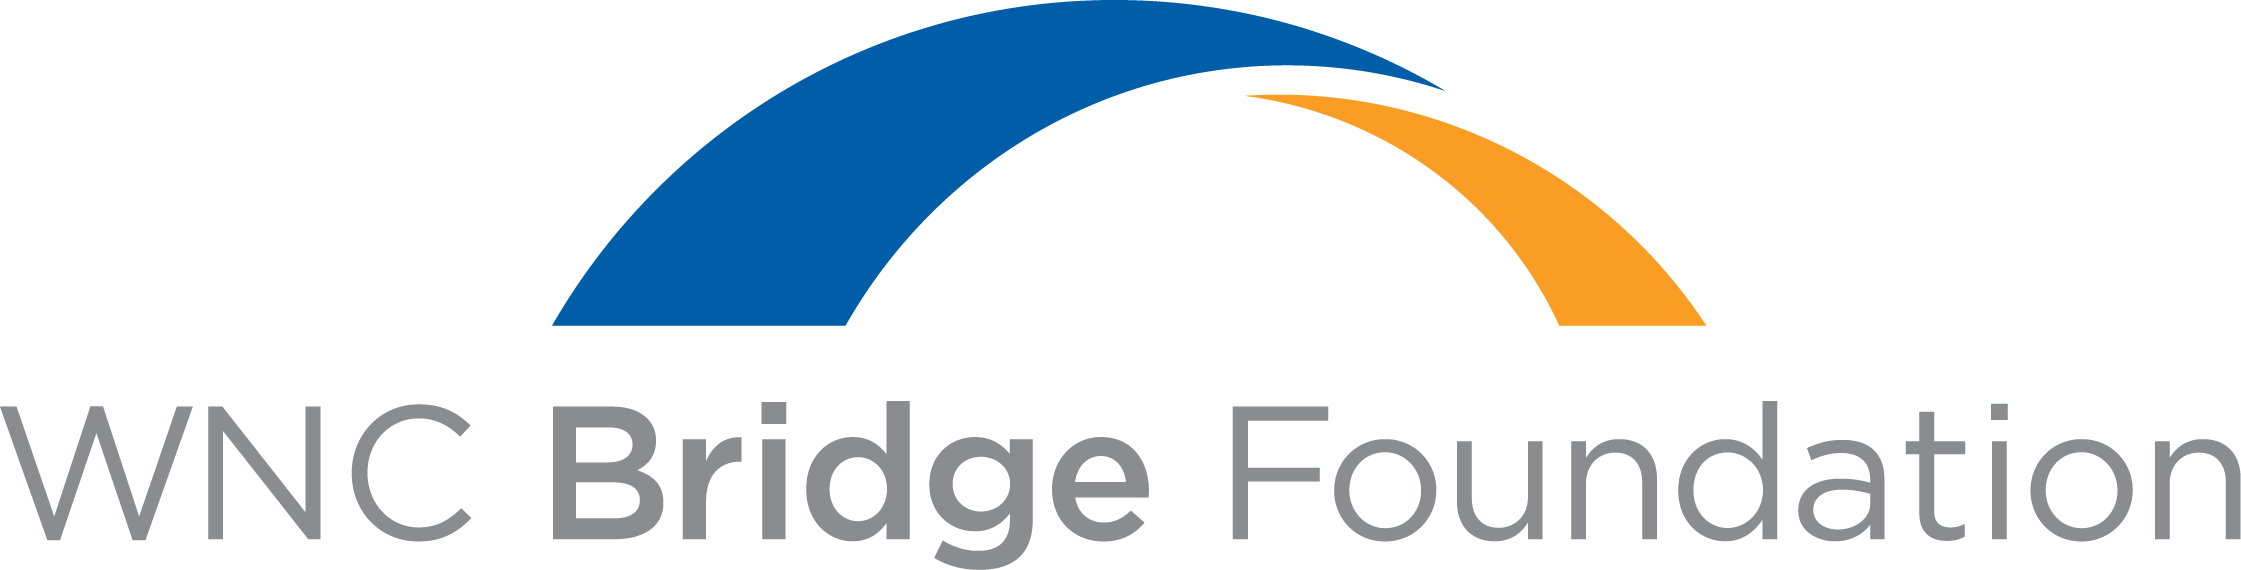 Bridge Foundation